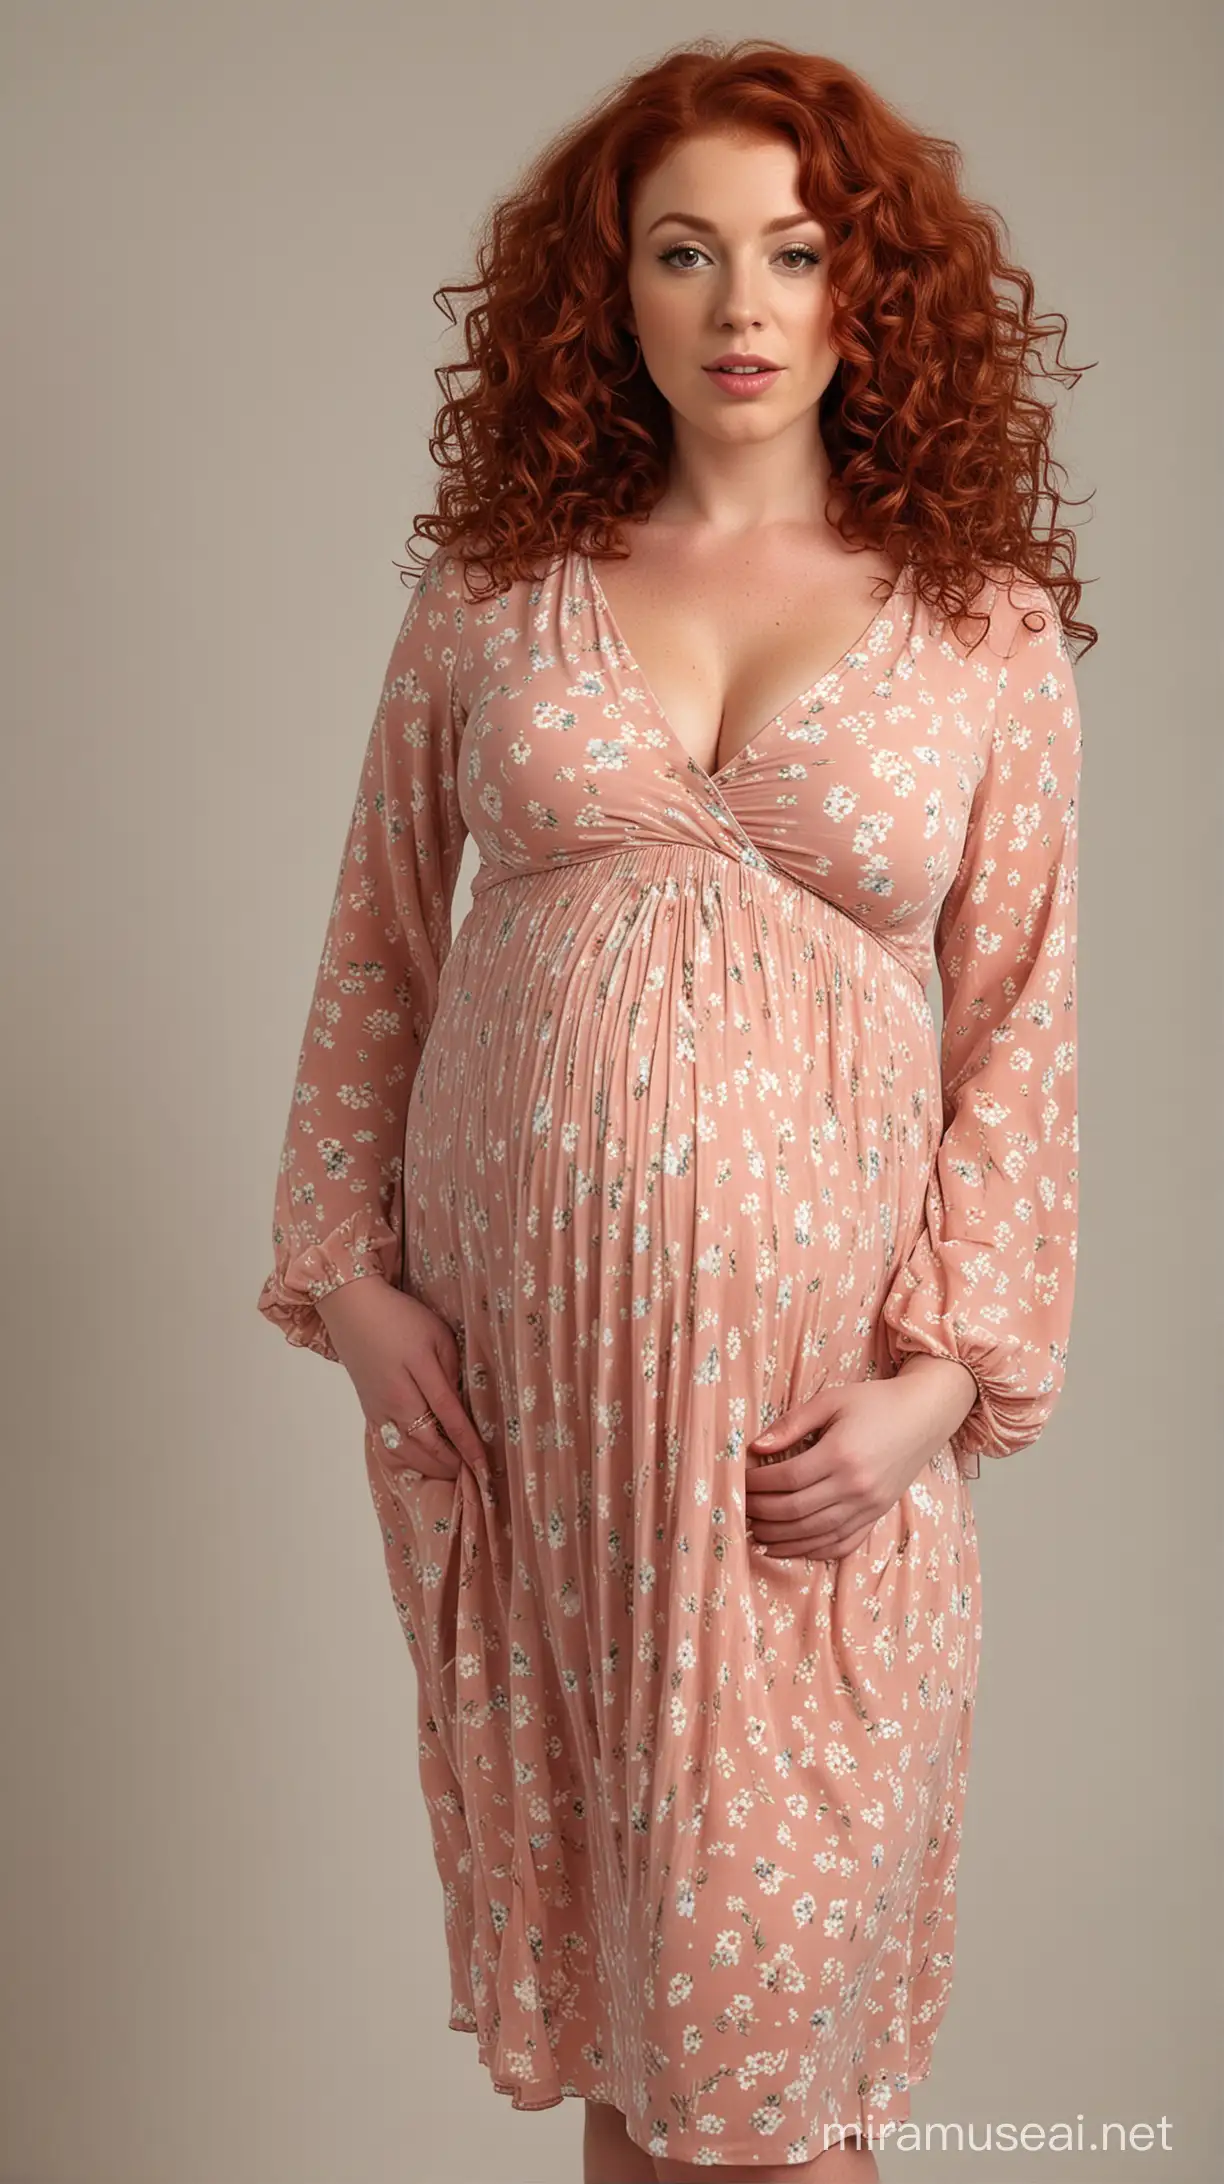 Gorgeous Maternity Model with Irish Red Hair in Soft Feminine Dress